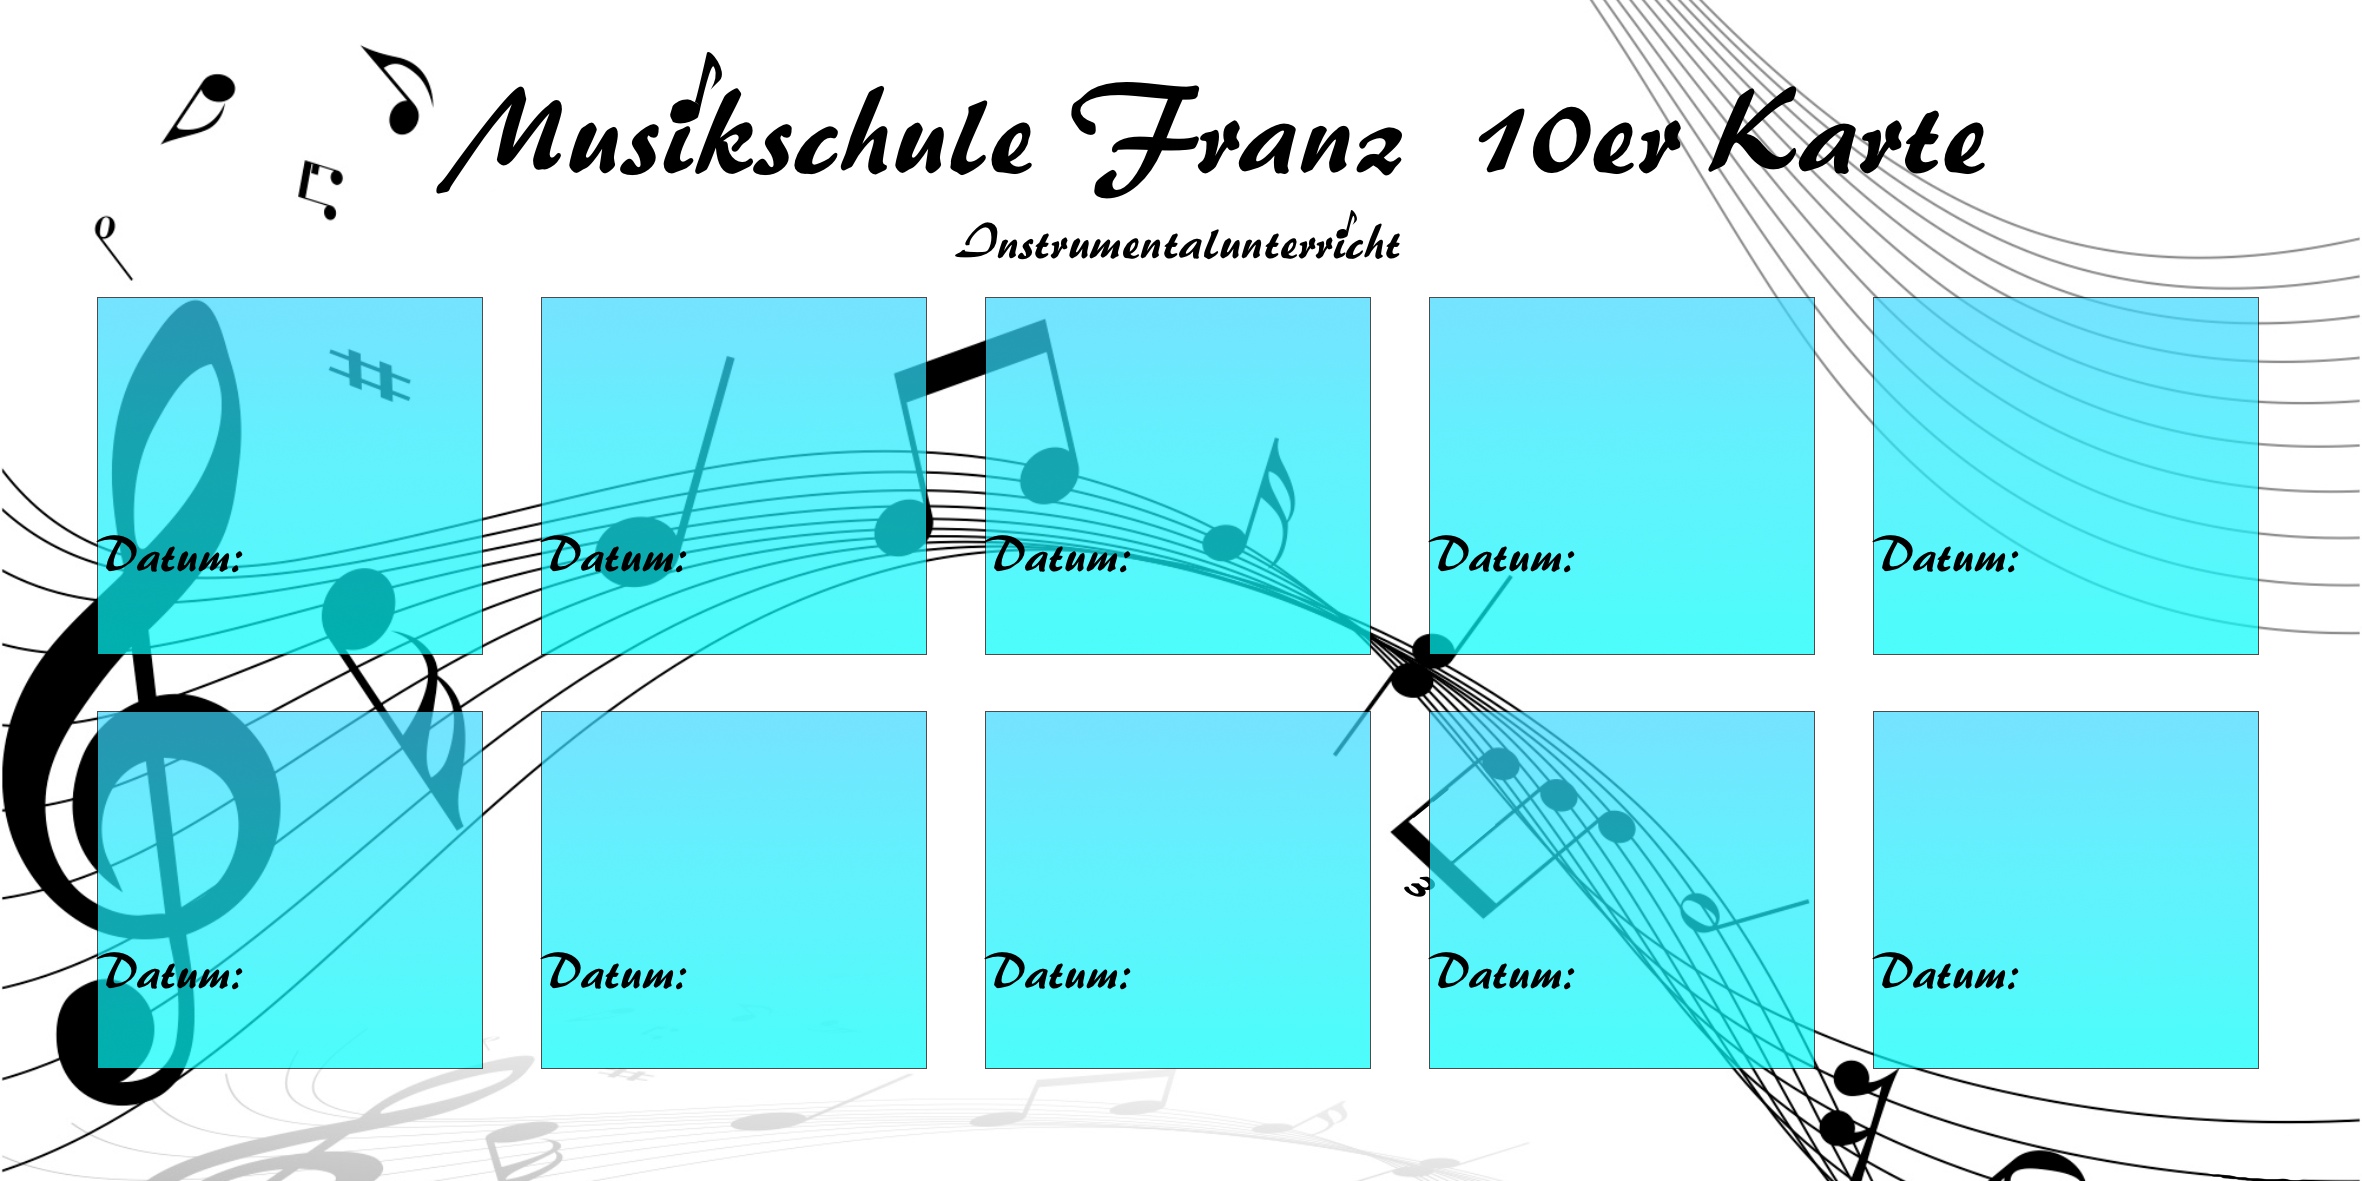 10er Karte Musikschule Franz